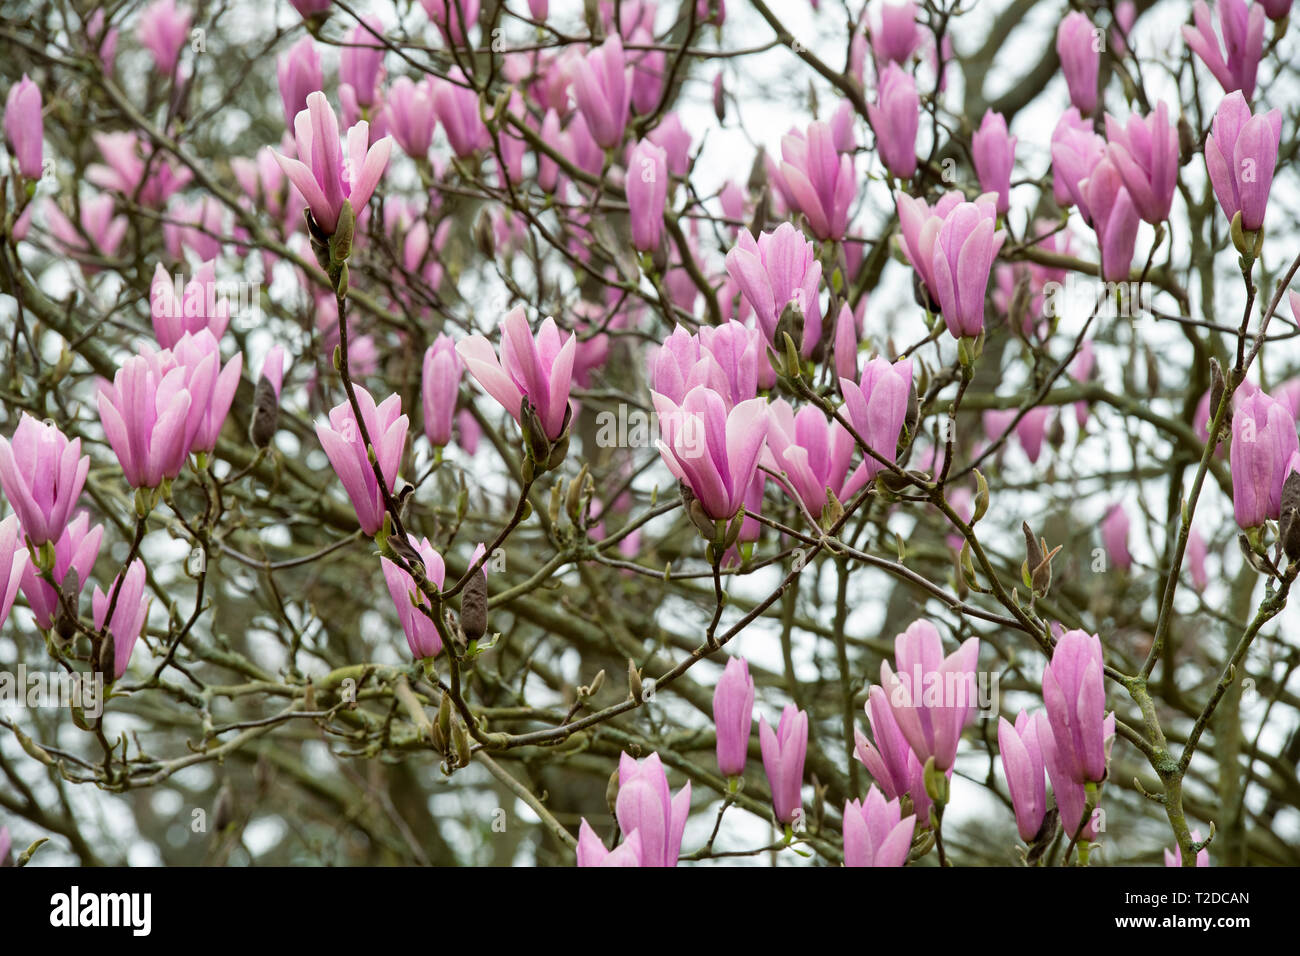 Magnolia ‘Heaven scent' tree flowering in spring. UK Stock Photo